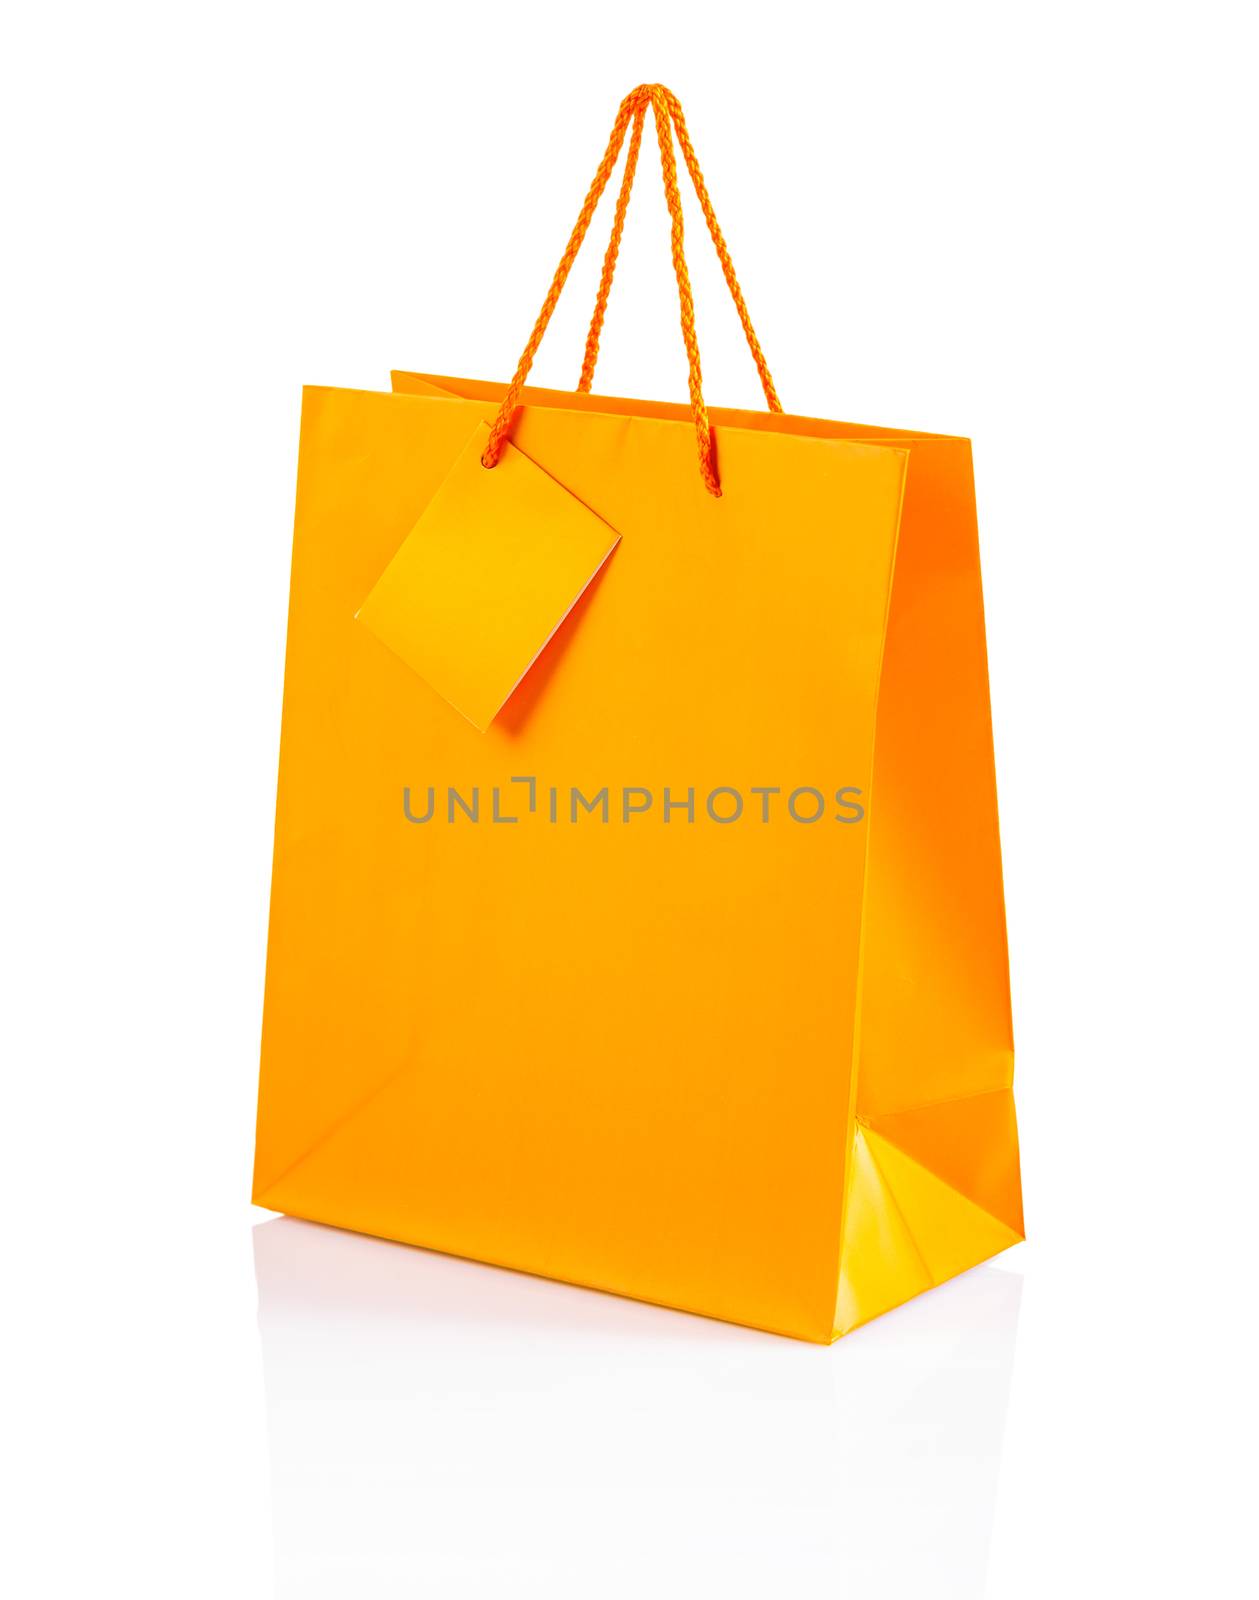 an orange color paper bag